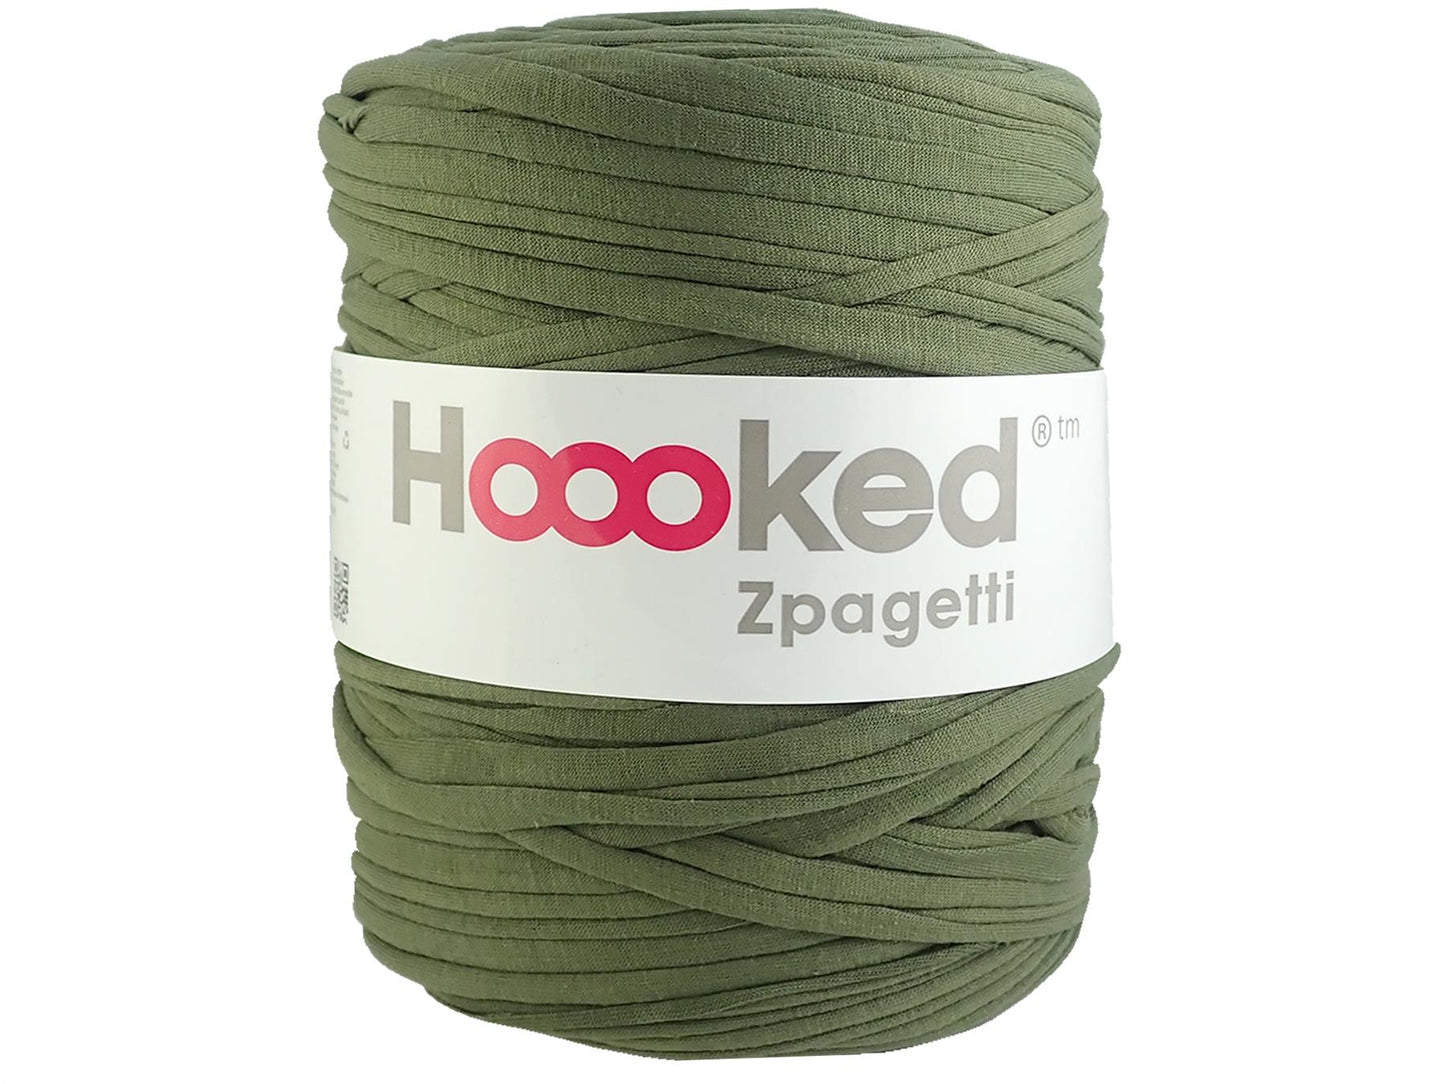 Hoooked Zpagetti Camo Green Cotton T-Shirt Yarn - 120M 700g